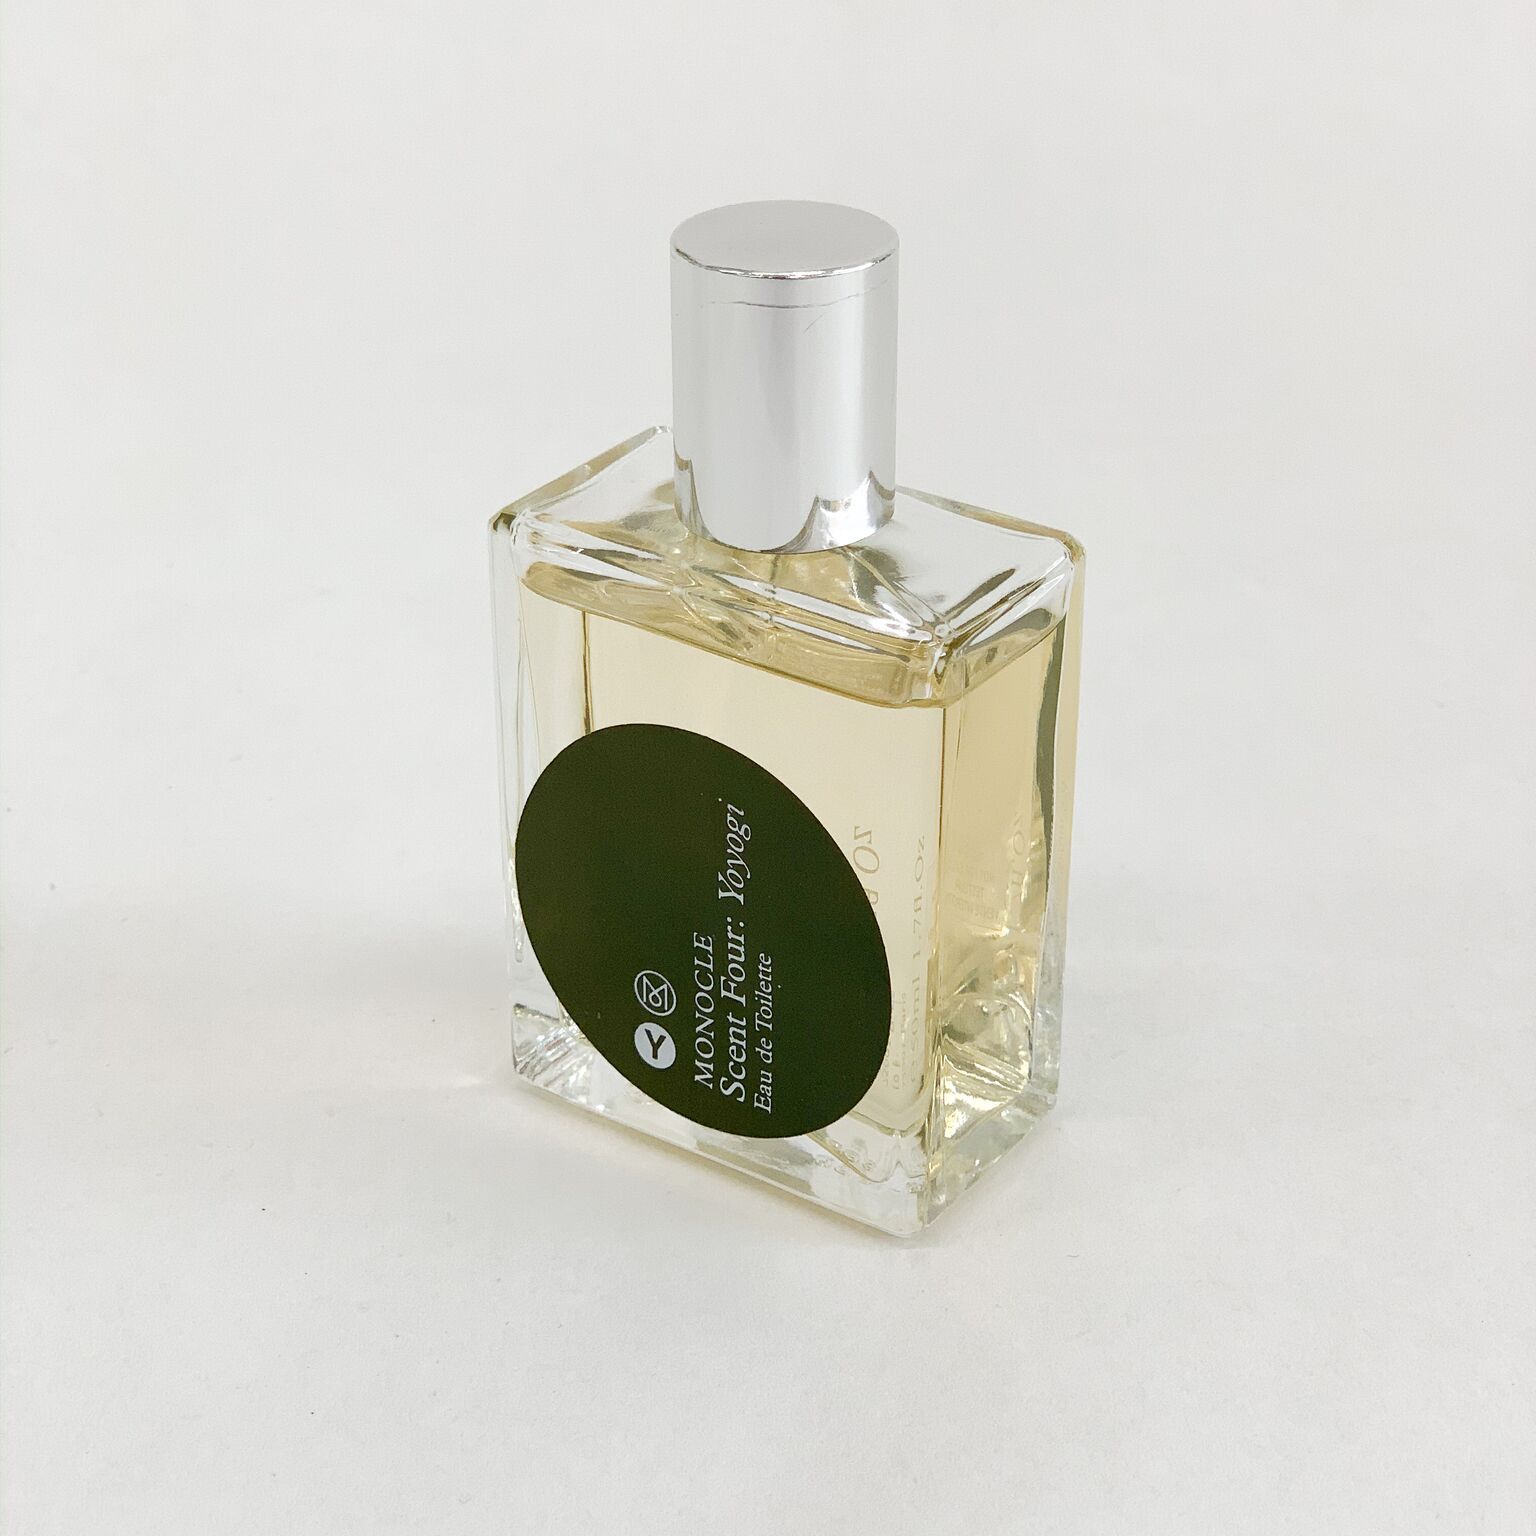 CDG Perfume - tortoise general store, monocle yoyogi